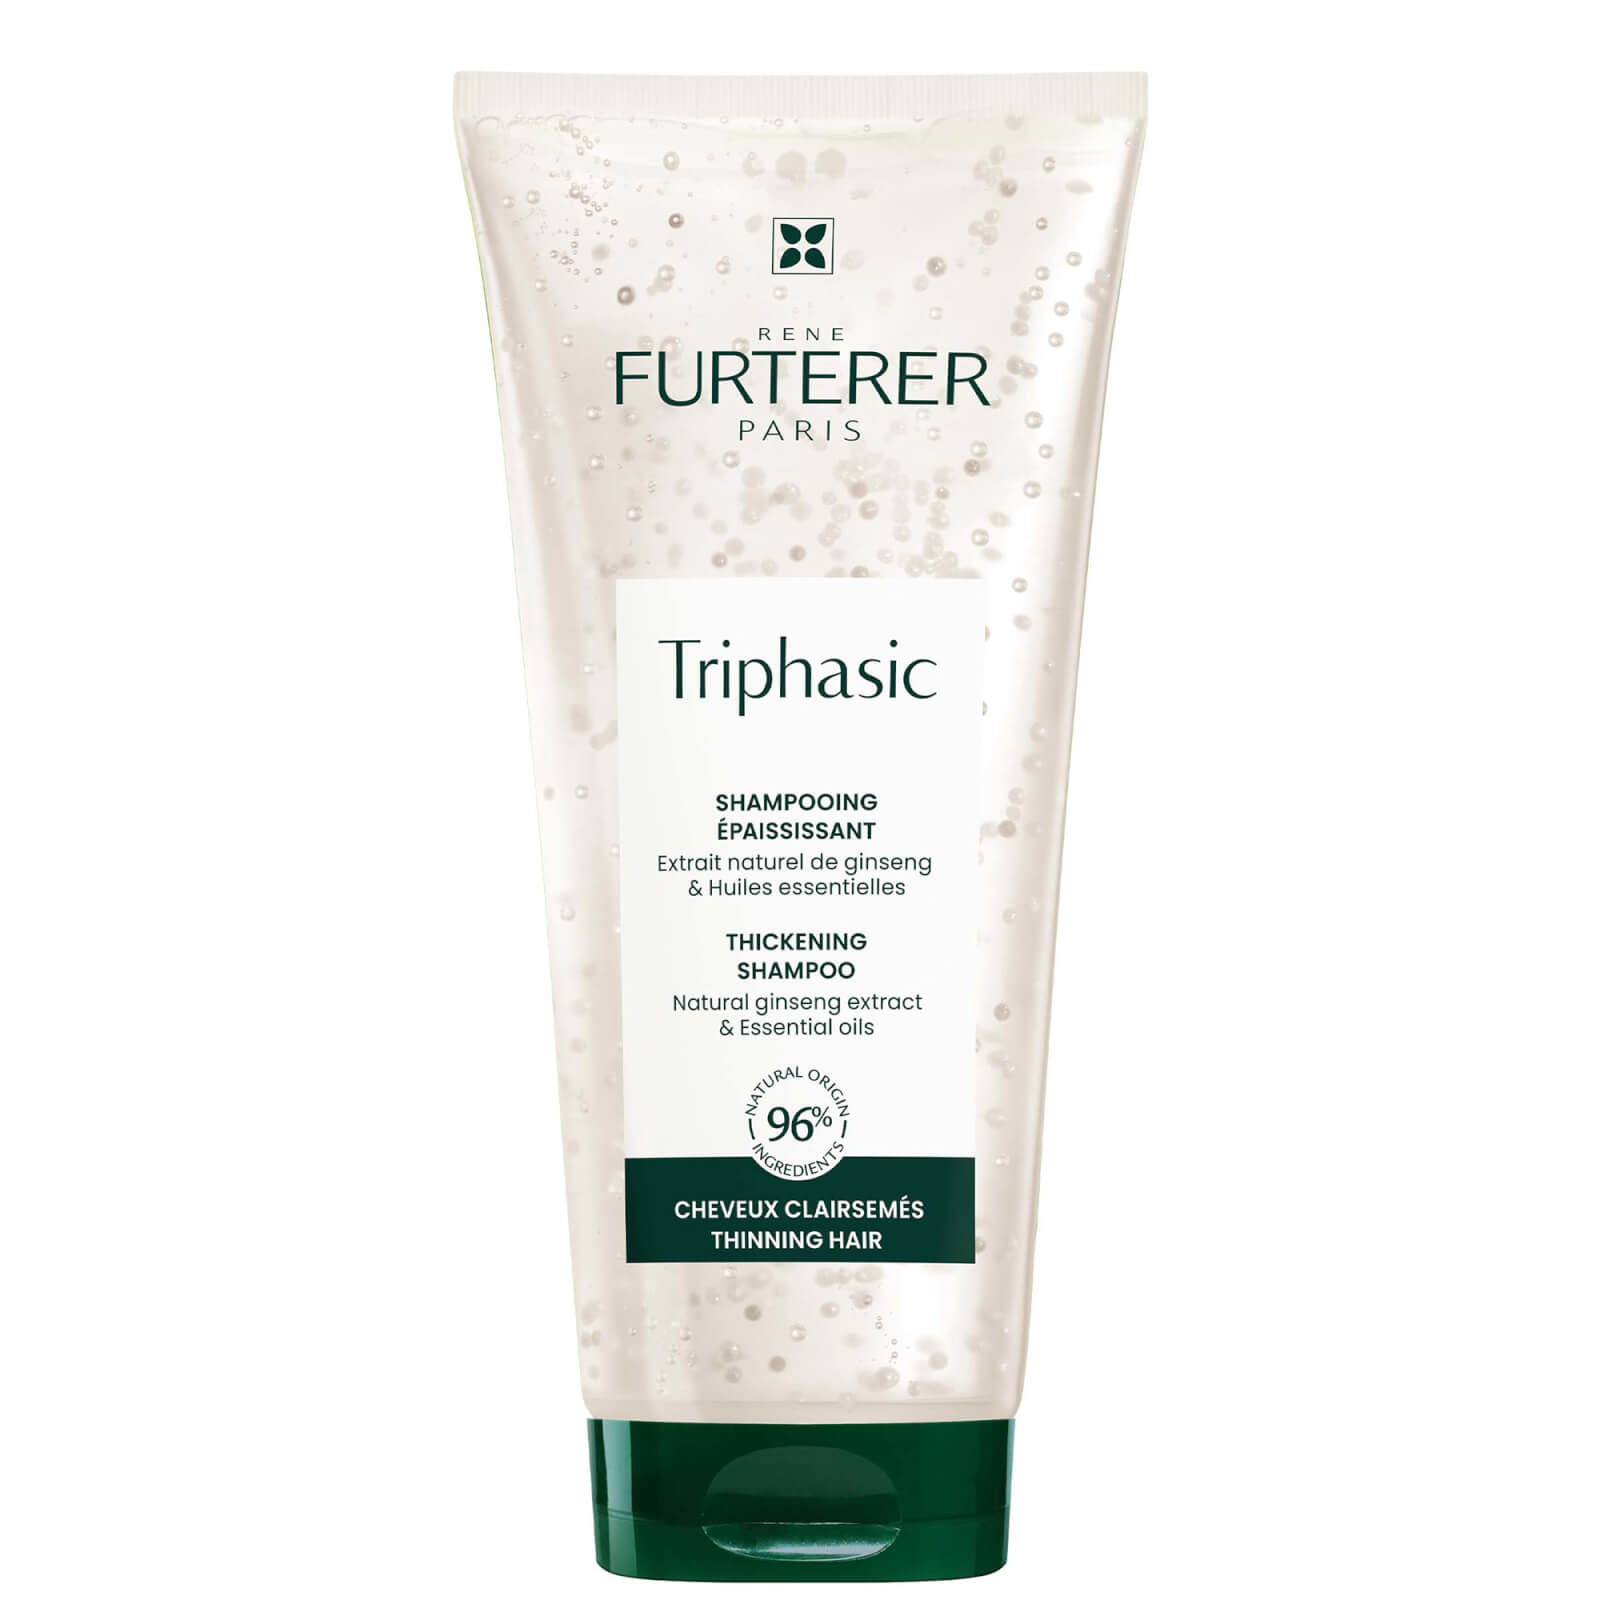 René Furterer Triphasic Thickening Shampoo 6.7 oz product